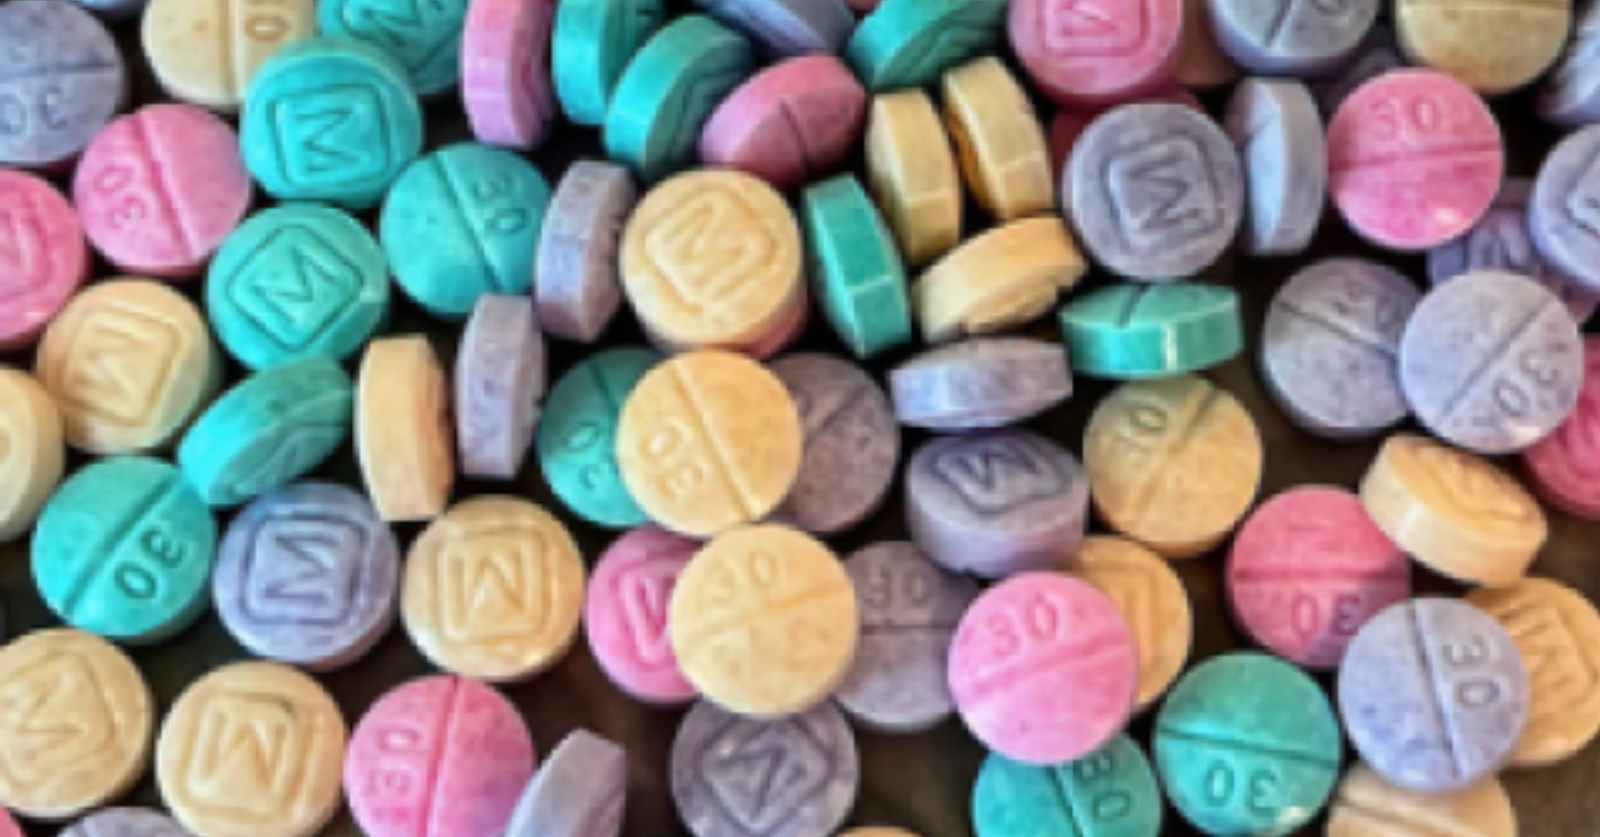 CDC alert: Drug overdose deaths involving counterfeit pills double